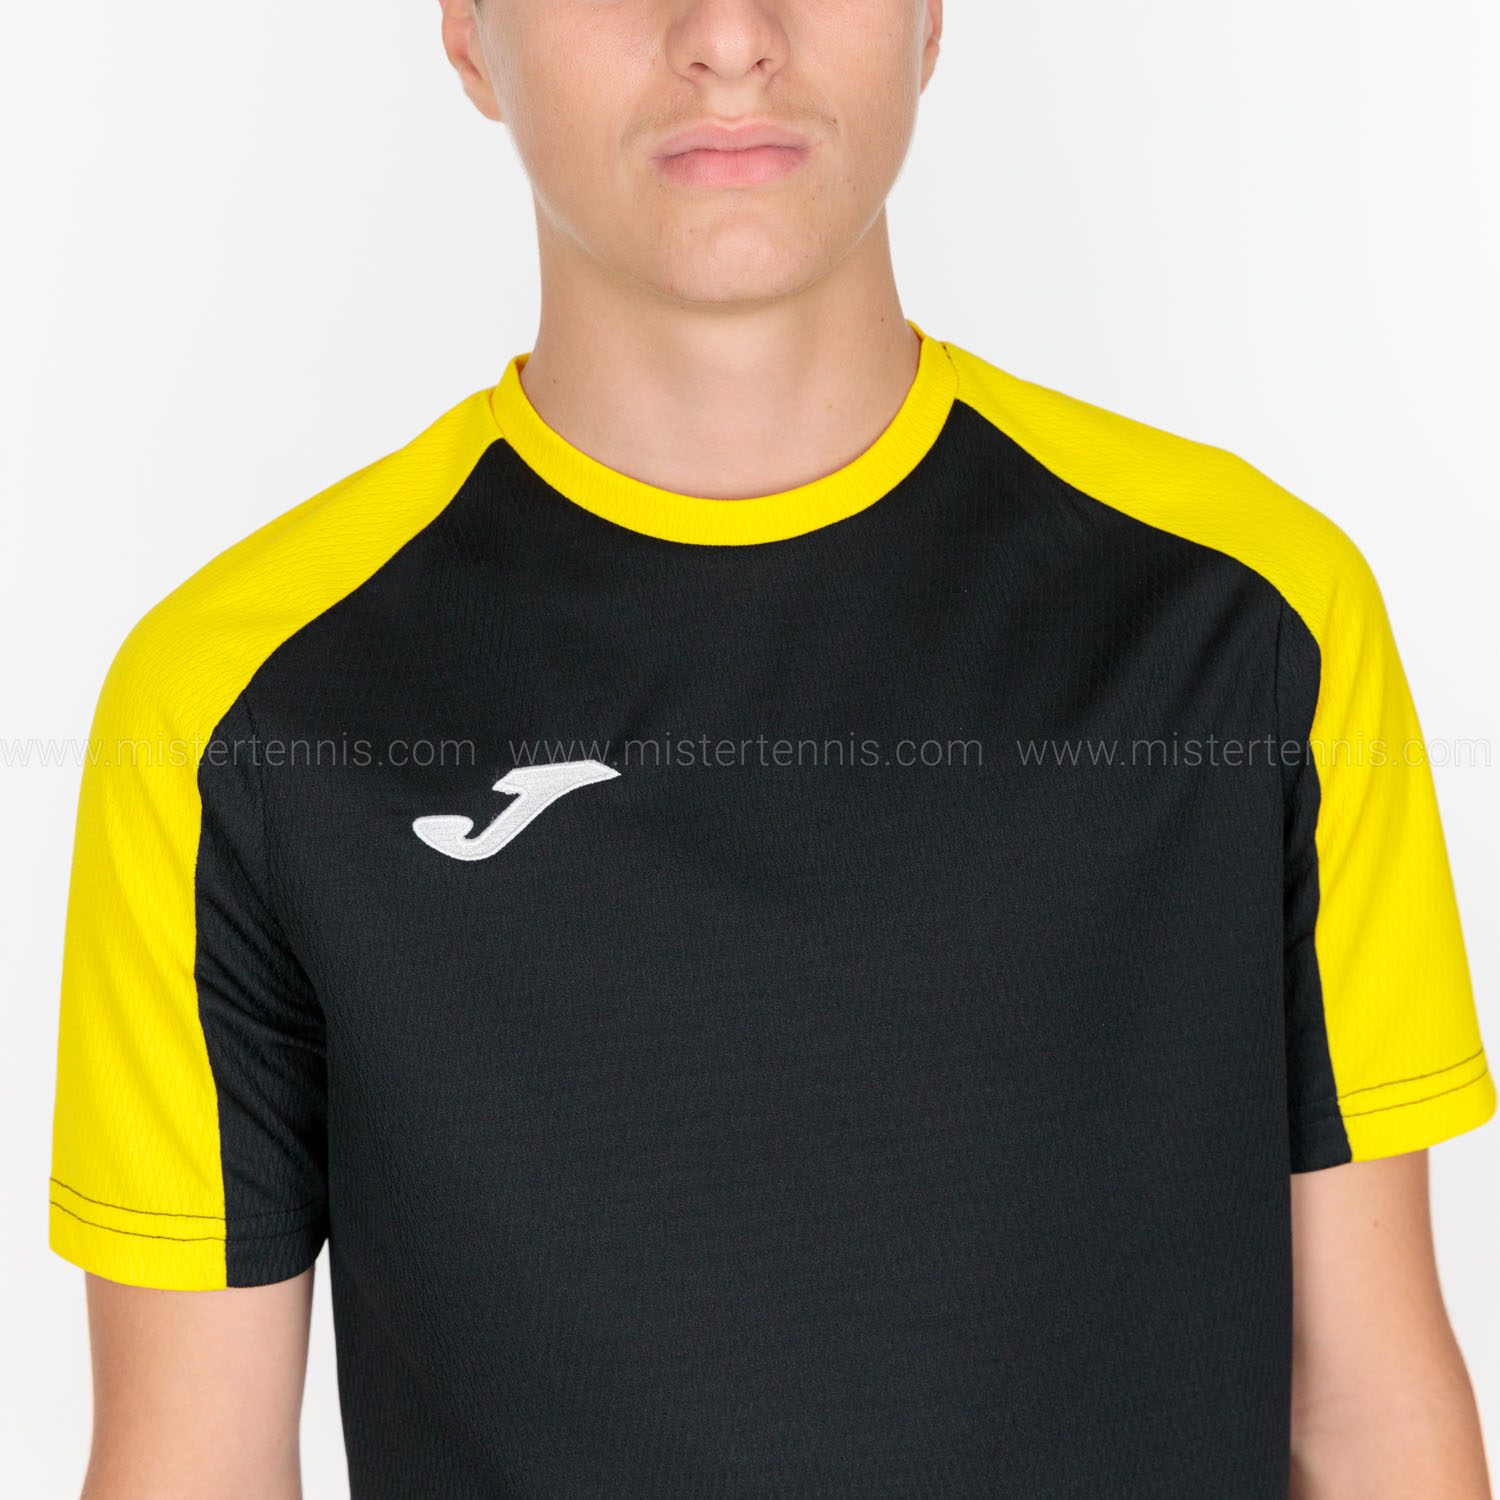 Joma Eco Championship Camiseta - Black/Yellow